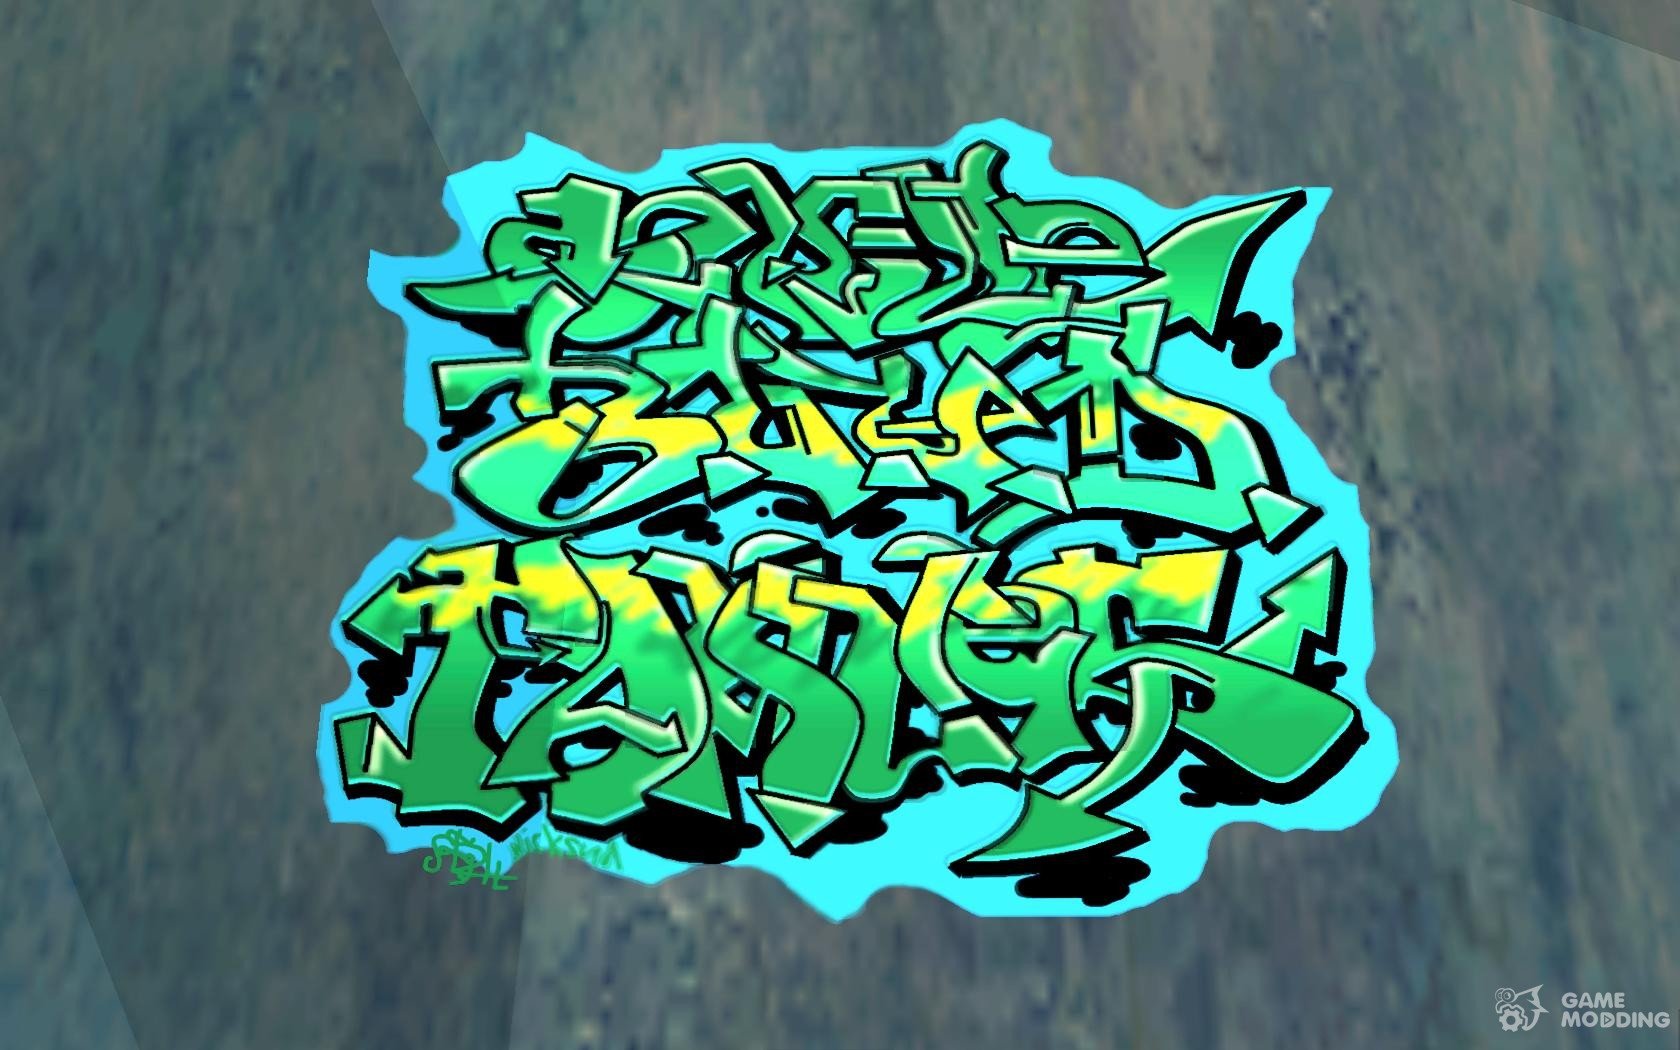 Grove Street GTA sa граффити